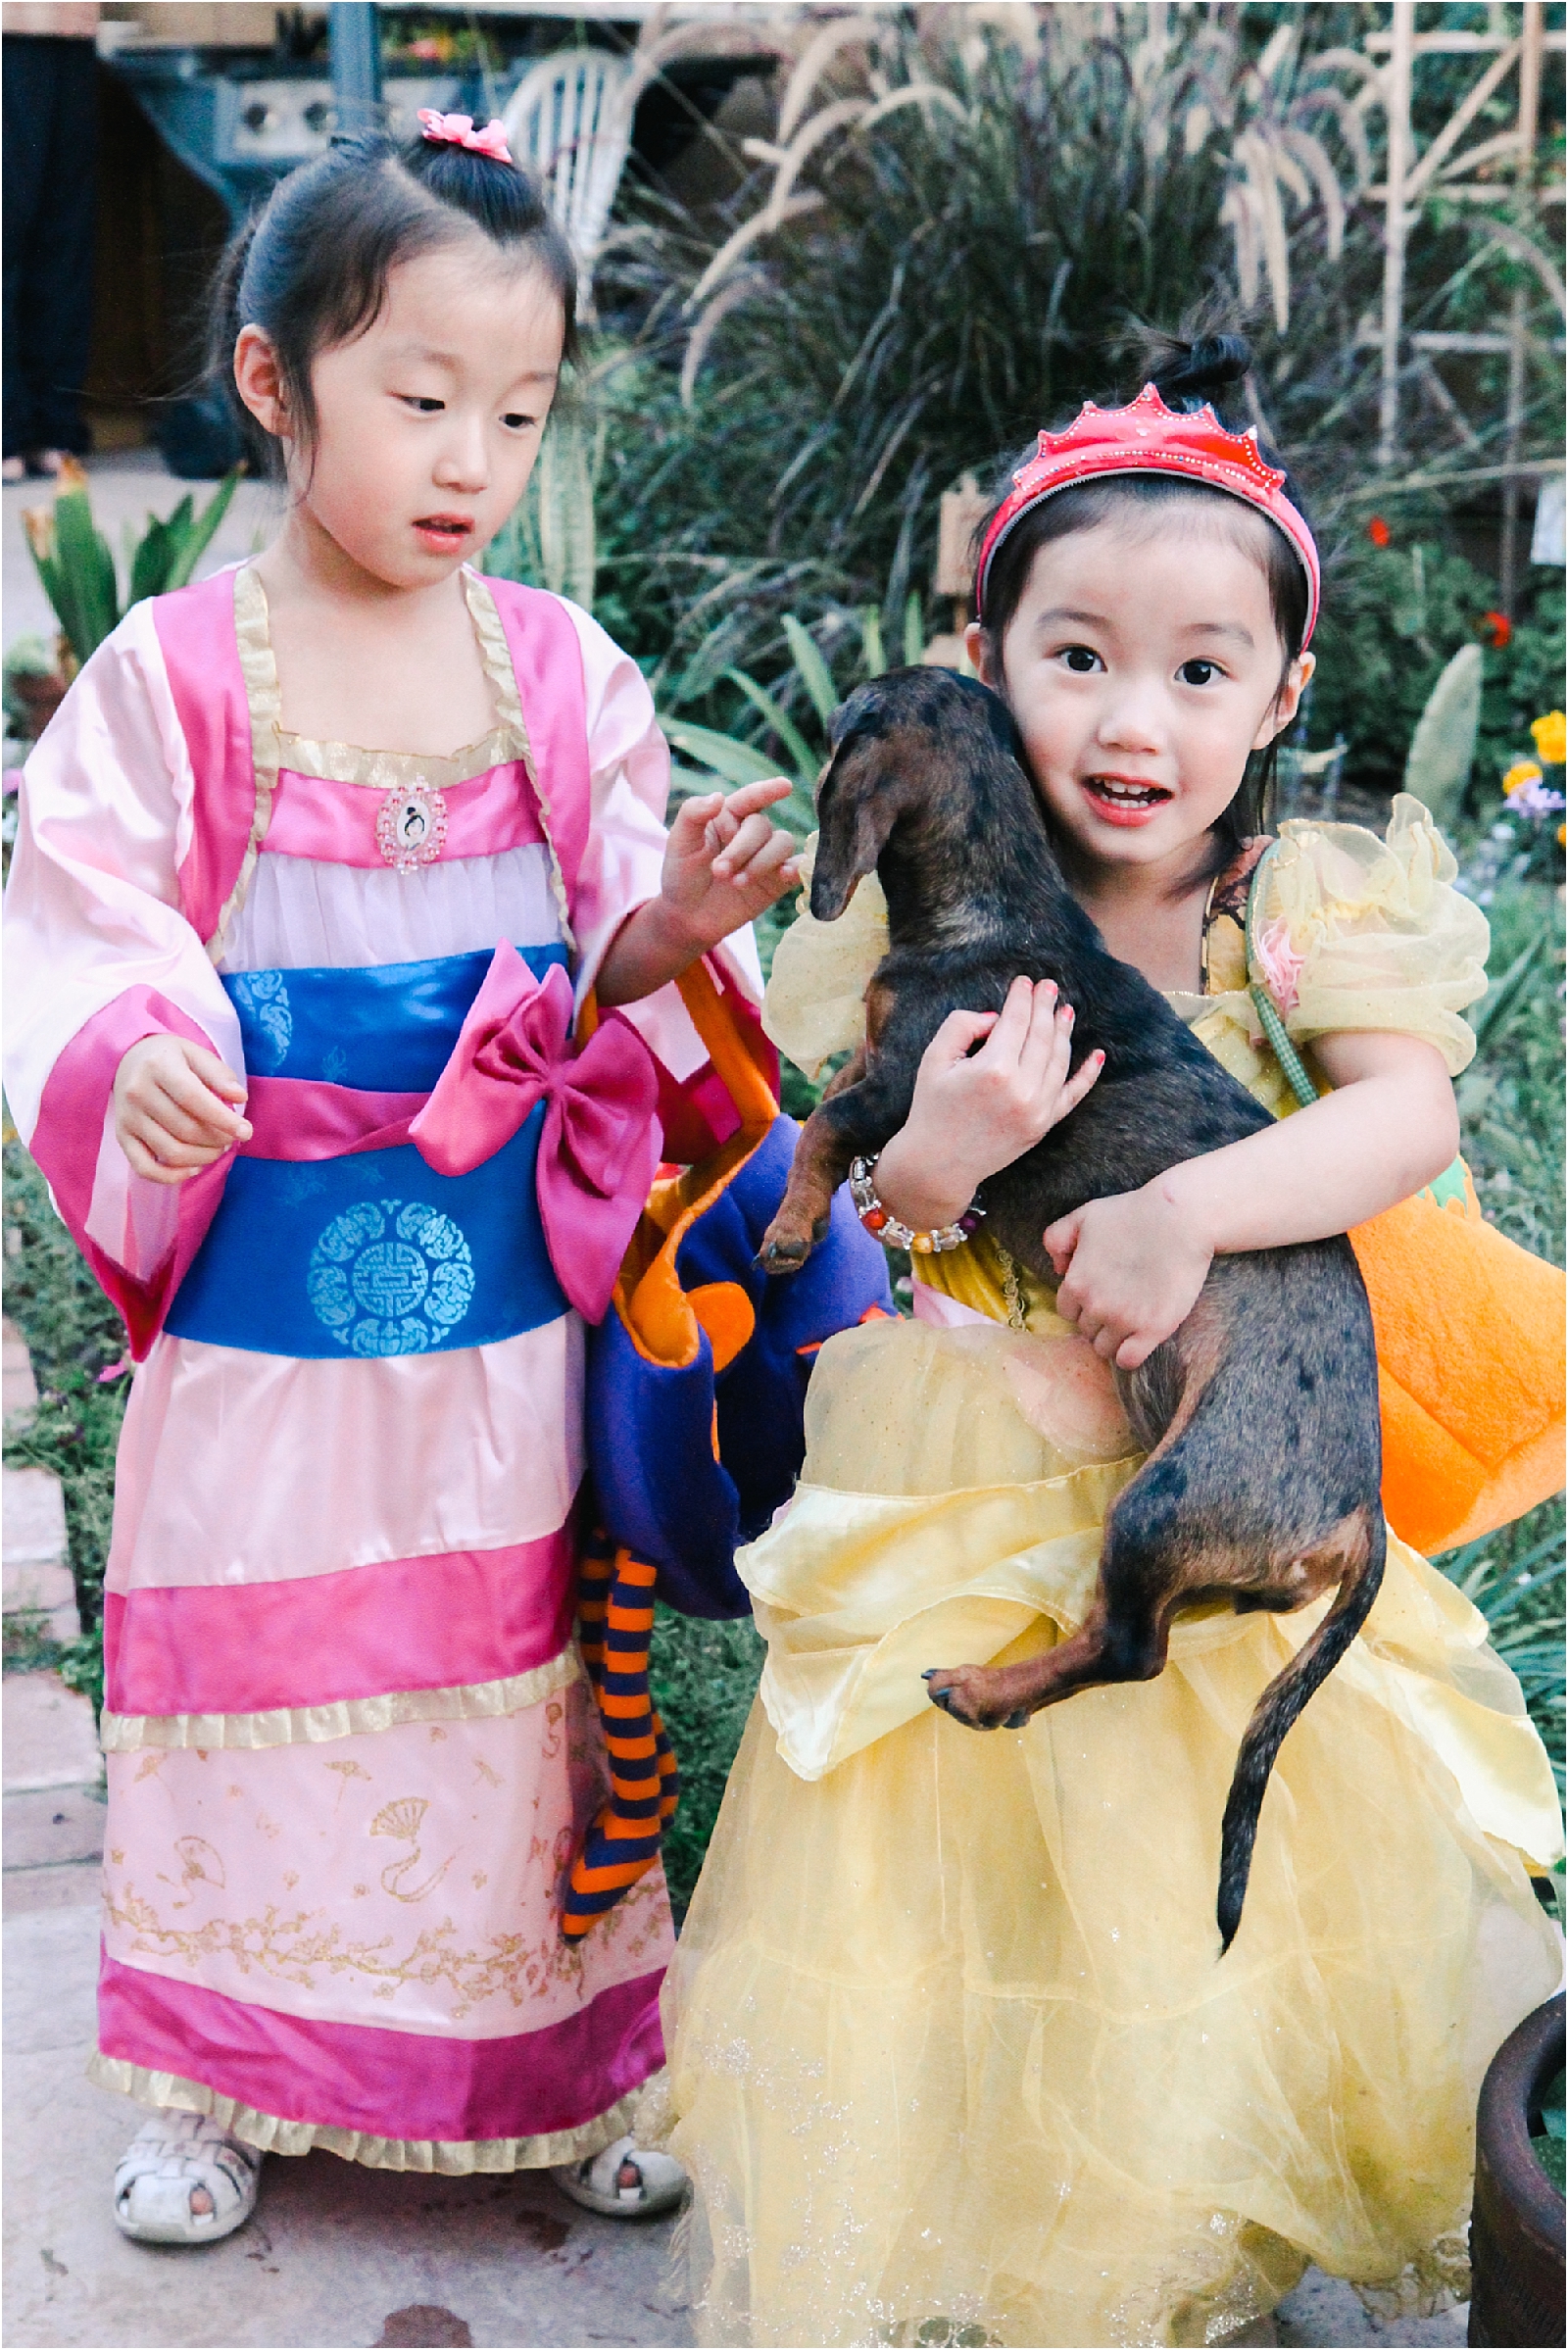 Halloween princess costumes